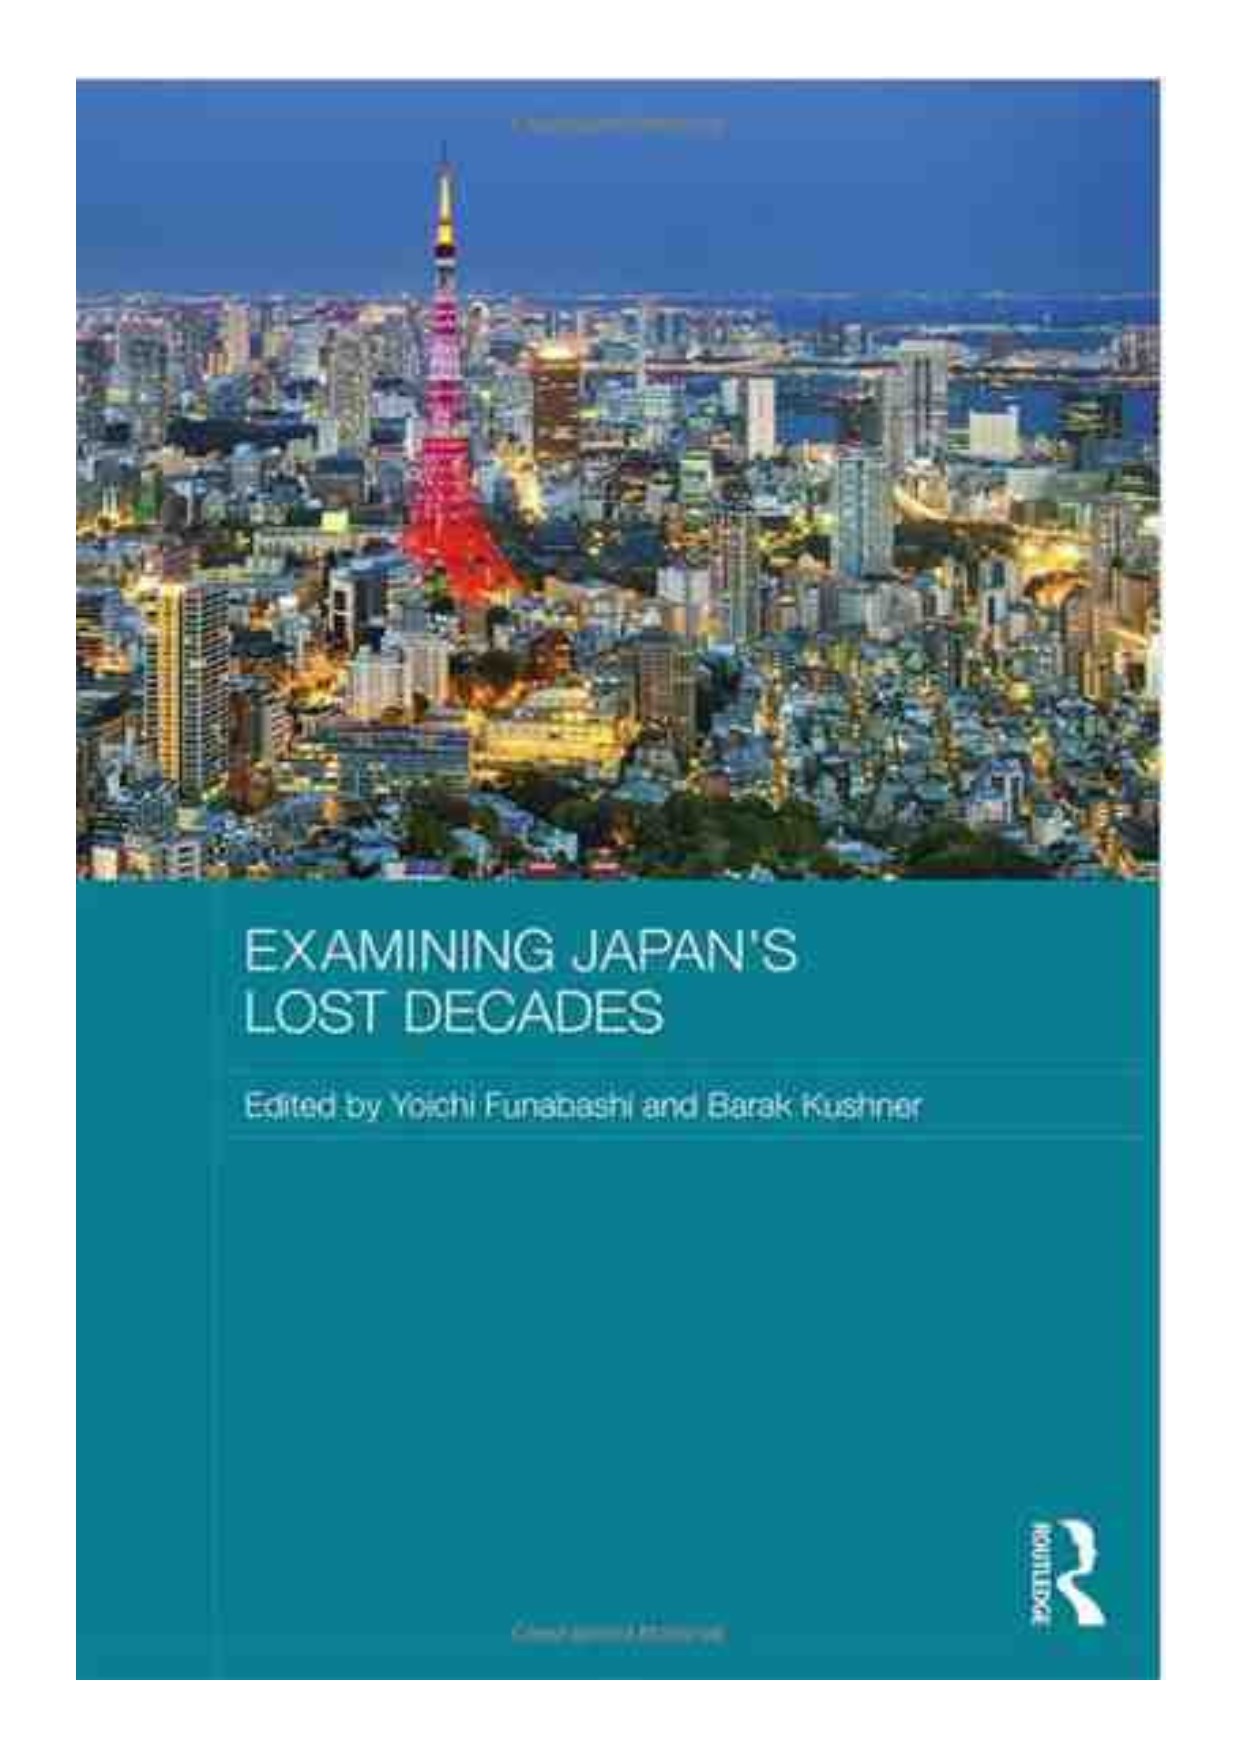 Examining Japan's lost decades